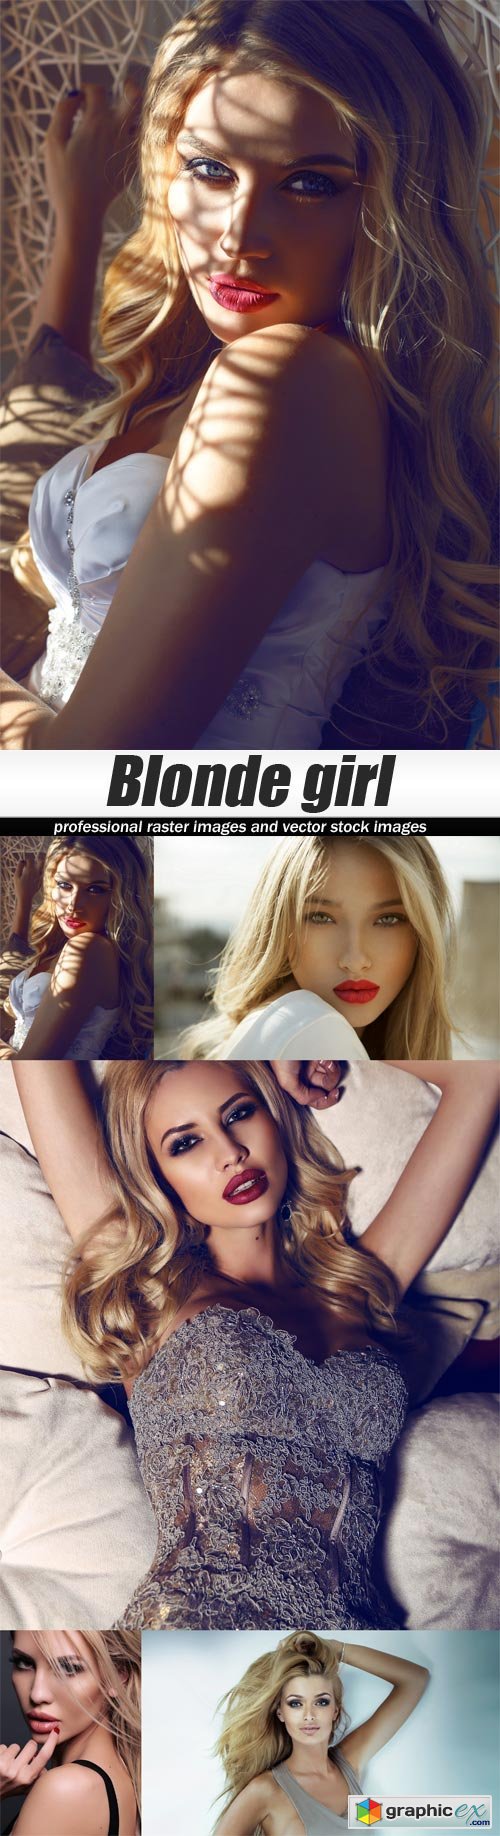 Blonde girl